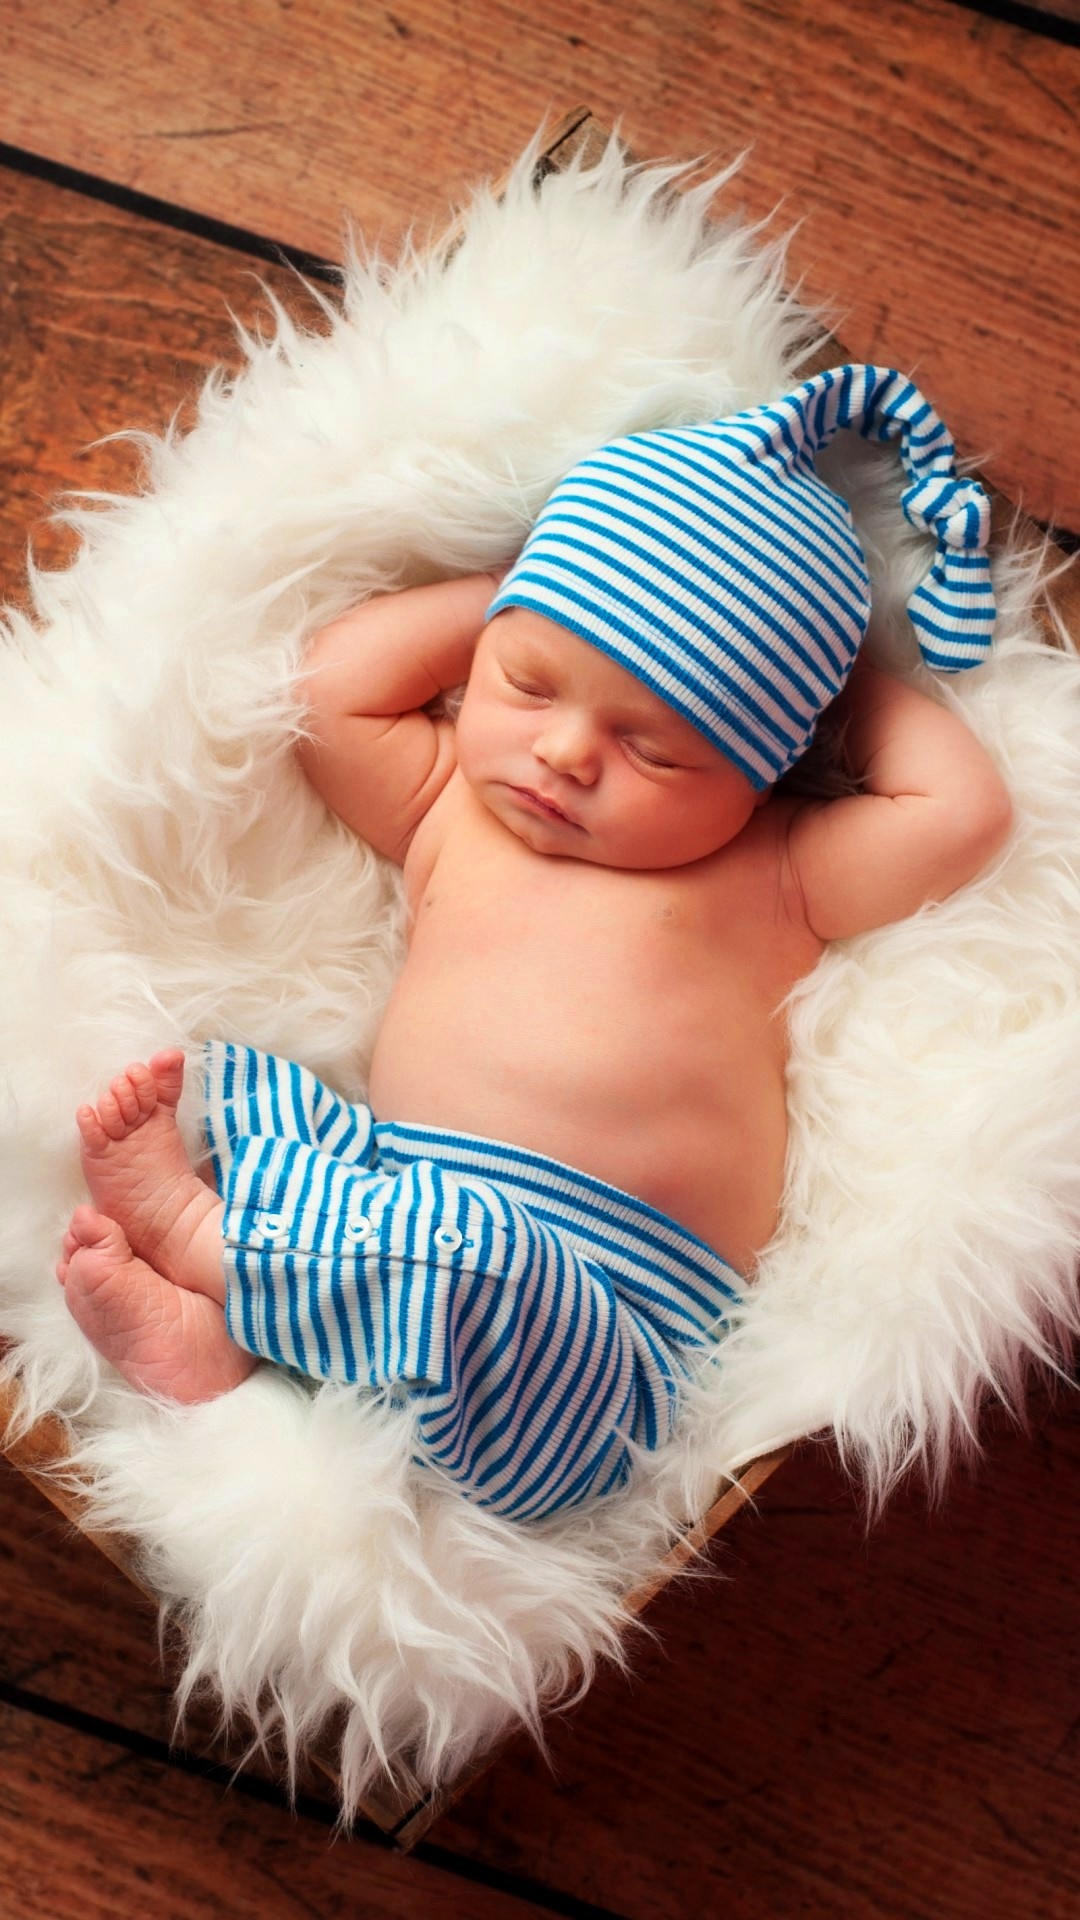 Cool Newborn Baby Sleeping - Mobile New Born Baby - 1080x1920 Wallpaper -  